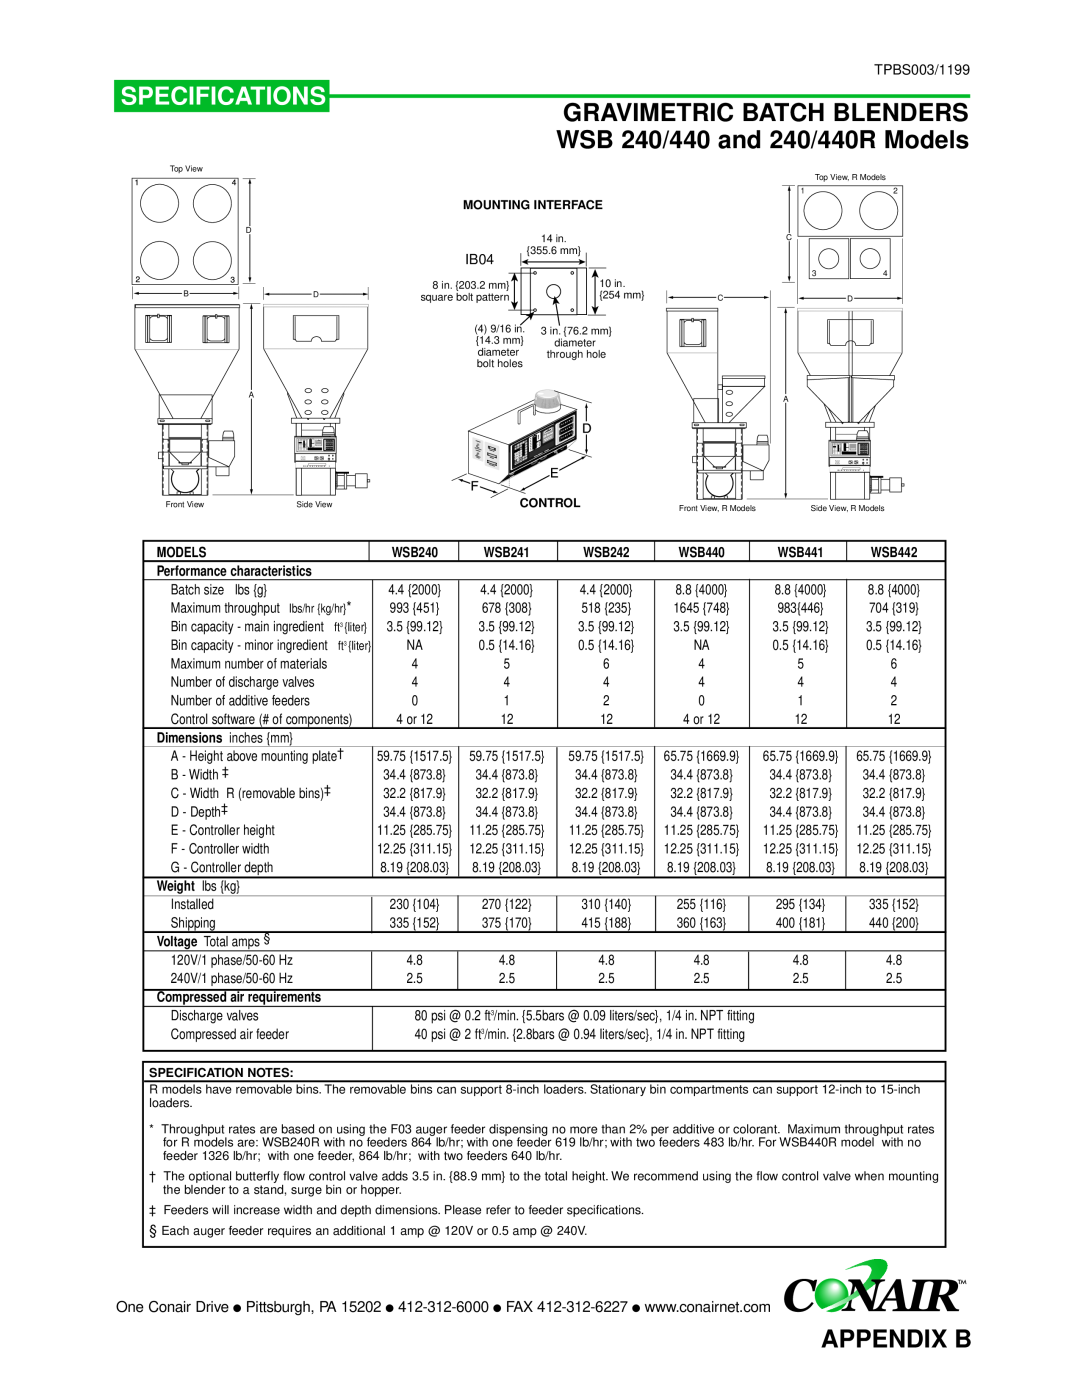 Conair GB/ WSB manual Specifications, Appendix B, Models, WSB442, Dimensions inches mm 